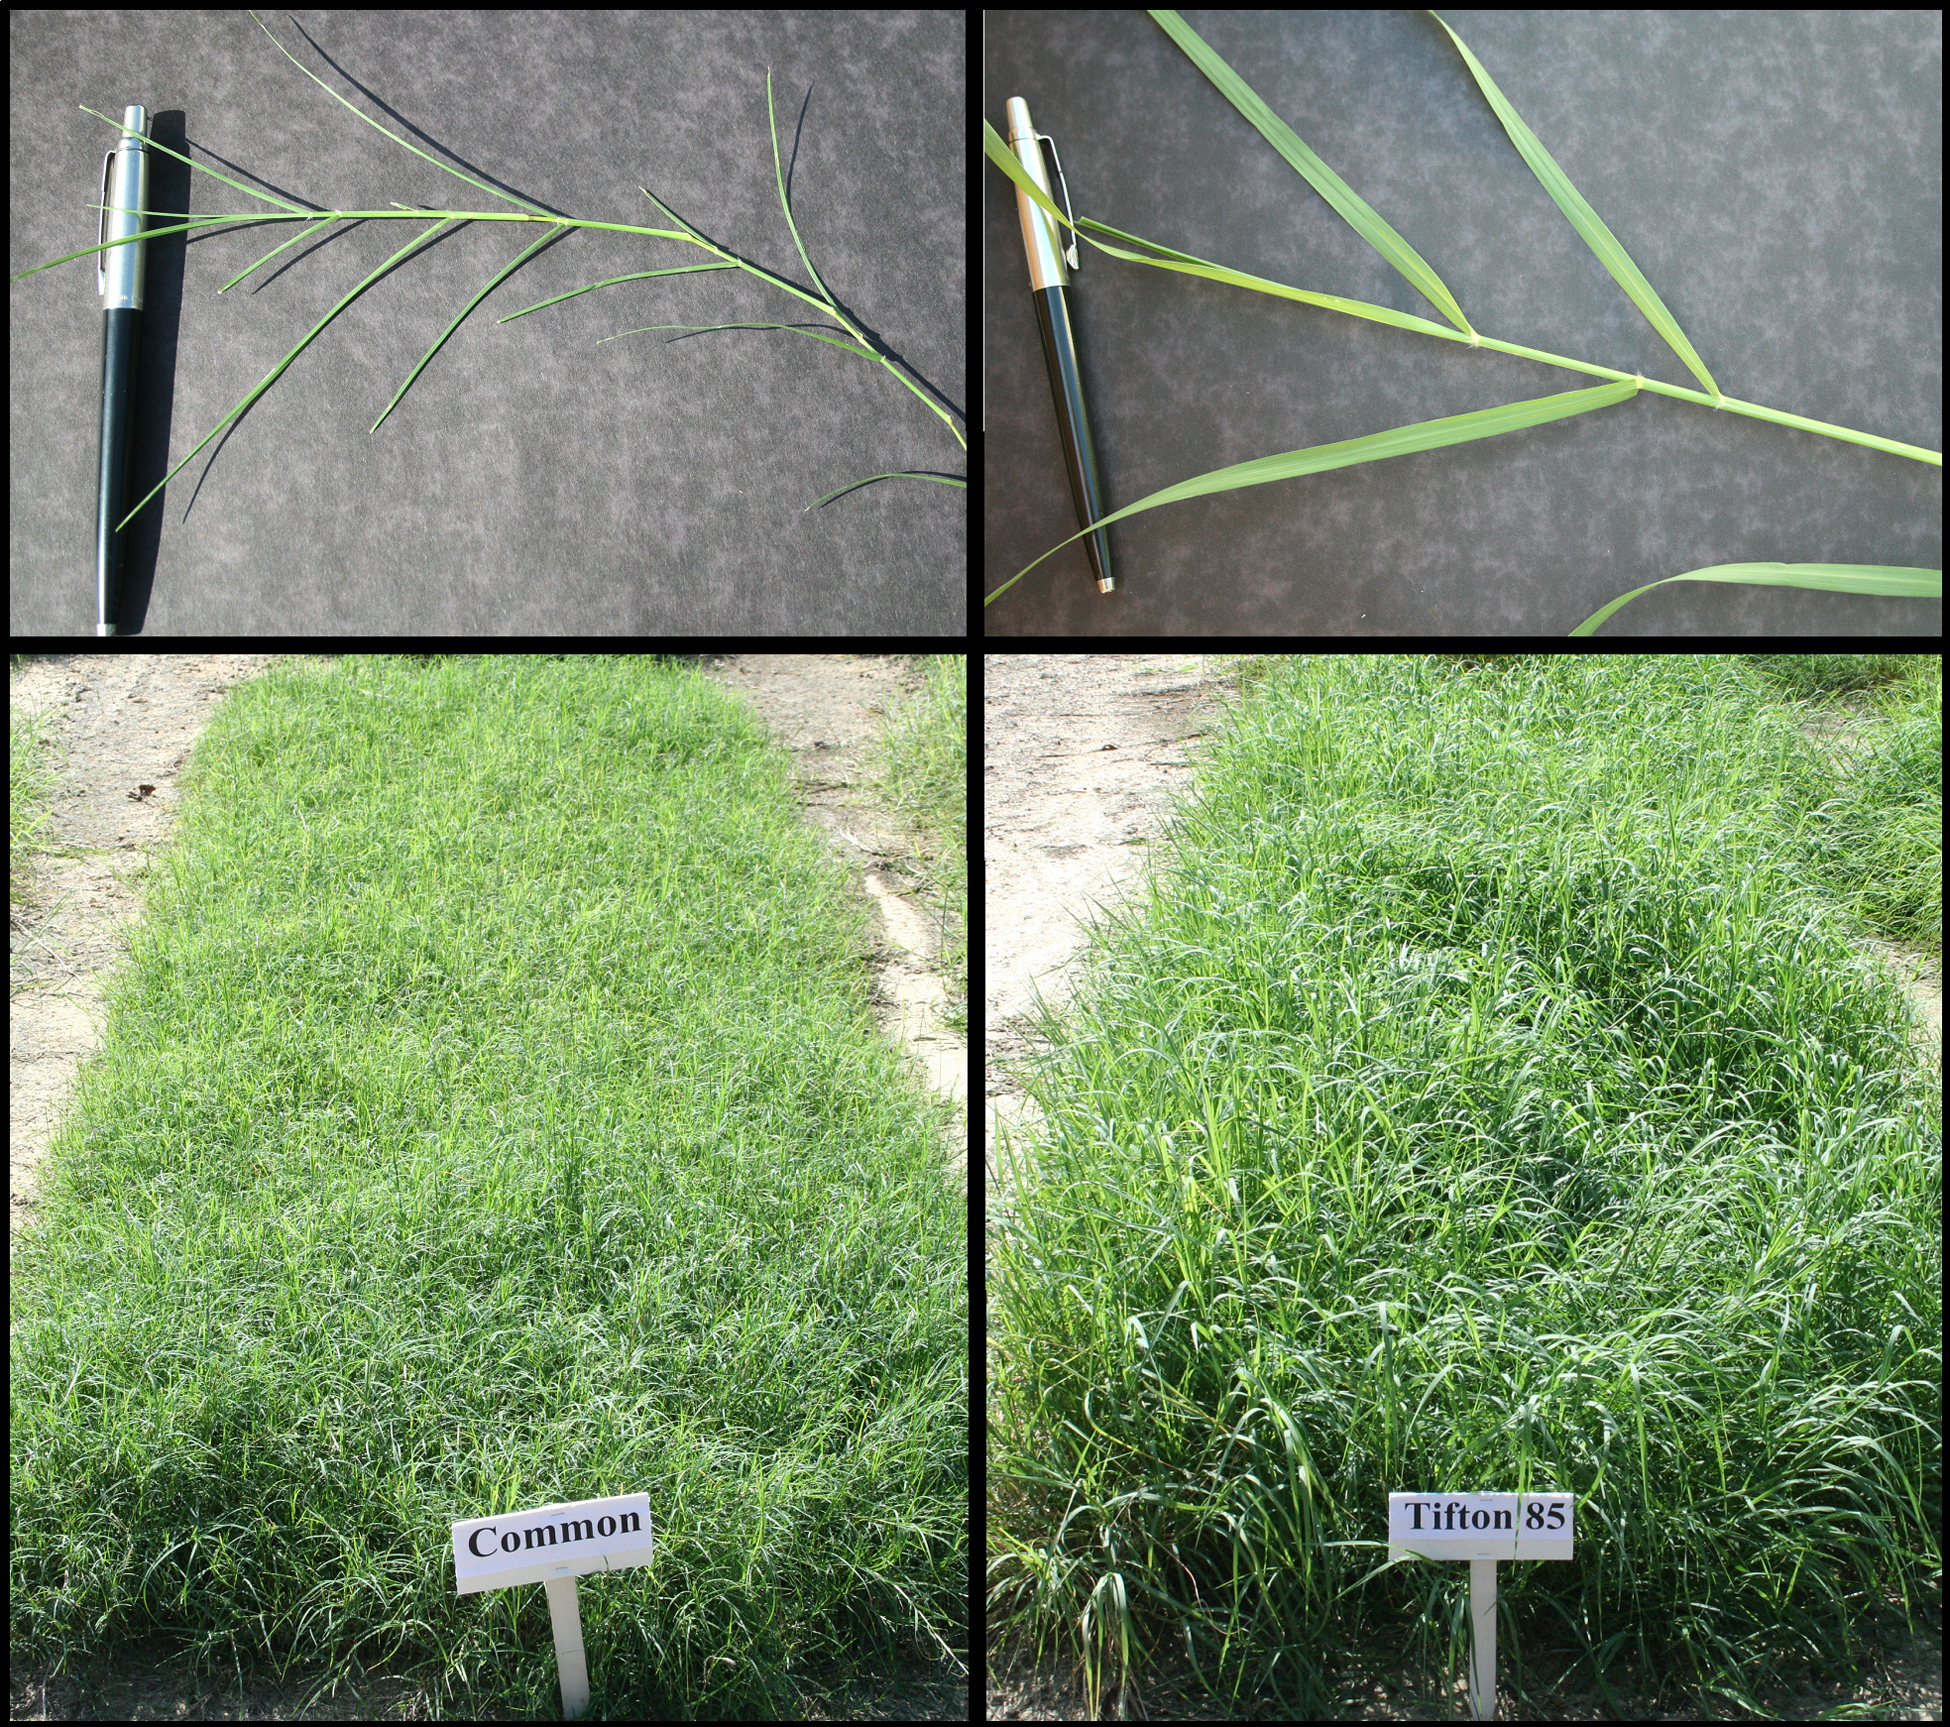 Comparison of common bermudagrass and Tifton-85 hybrid bermudagrass